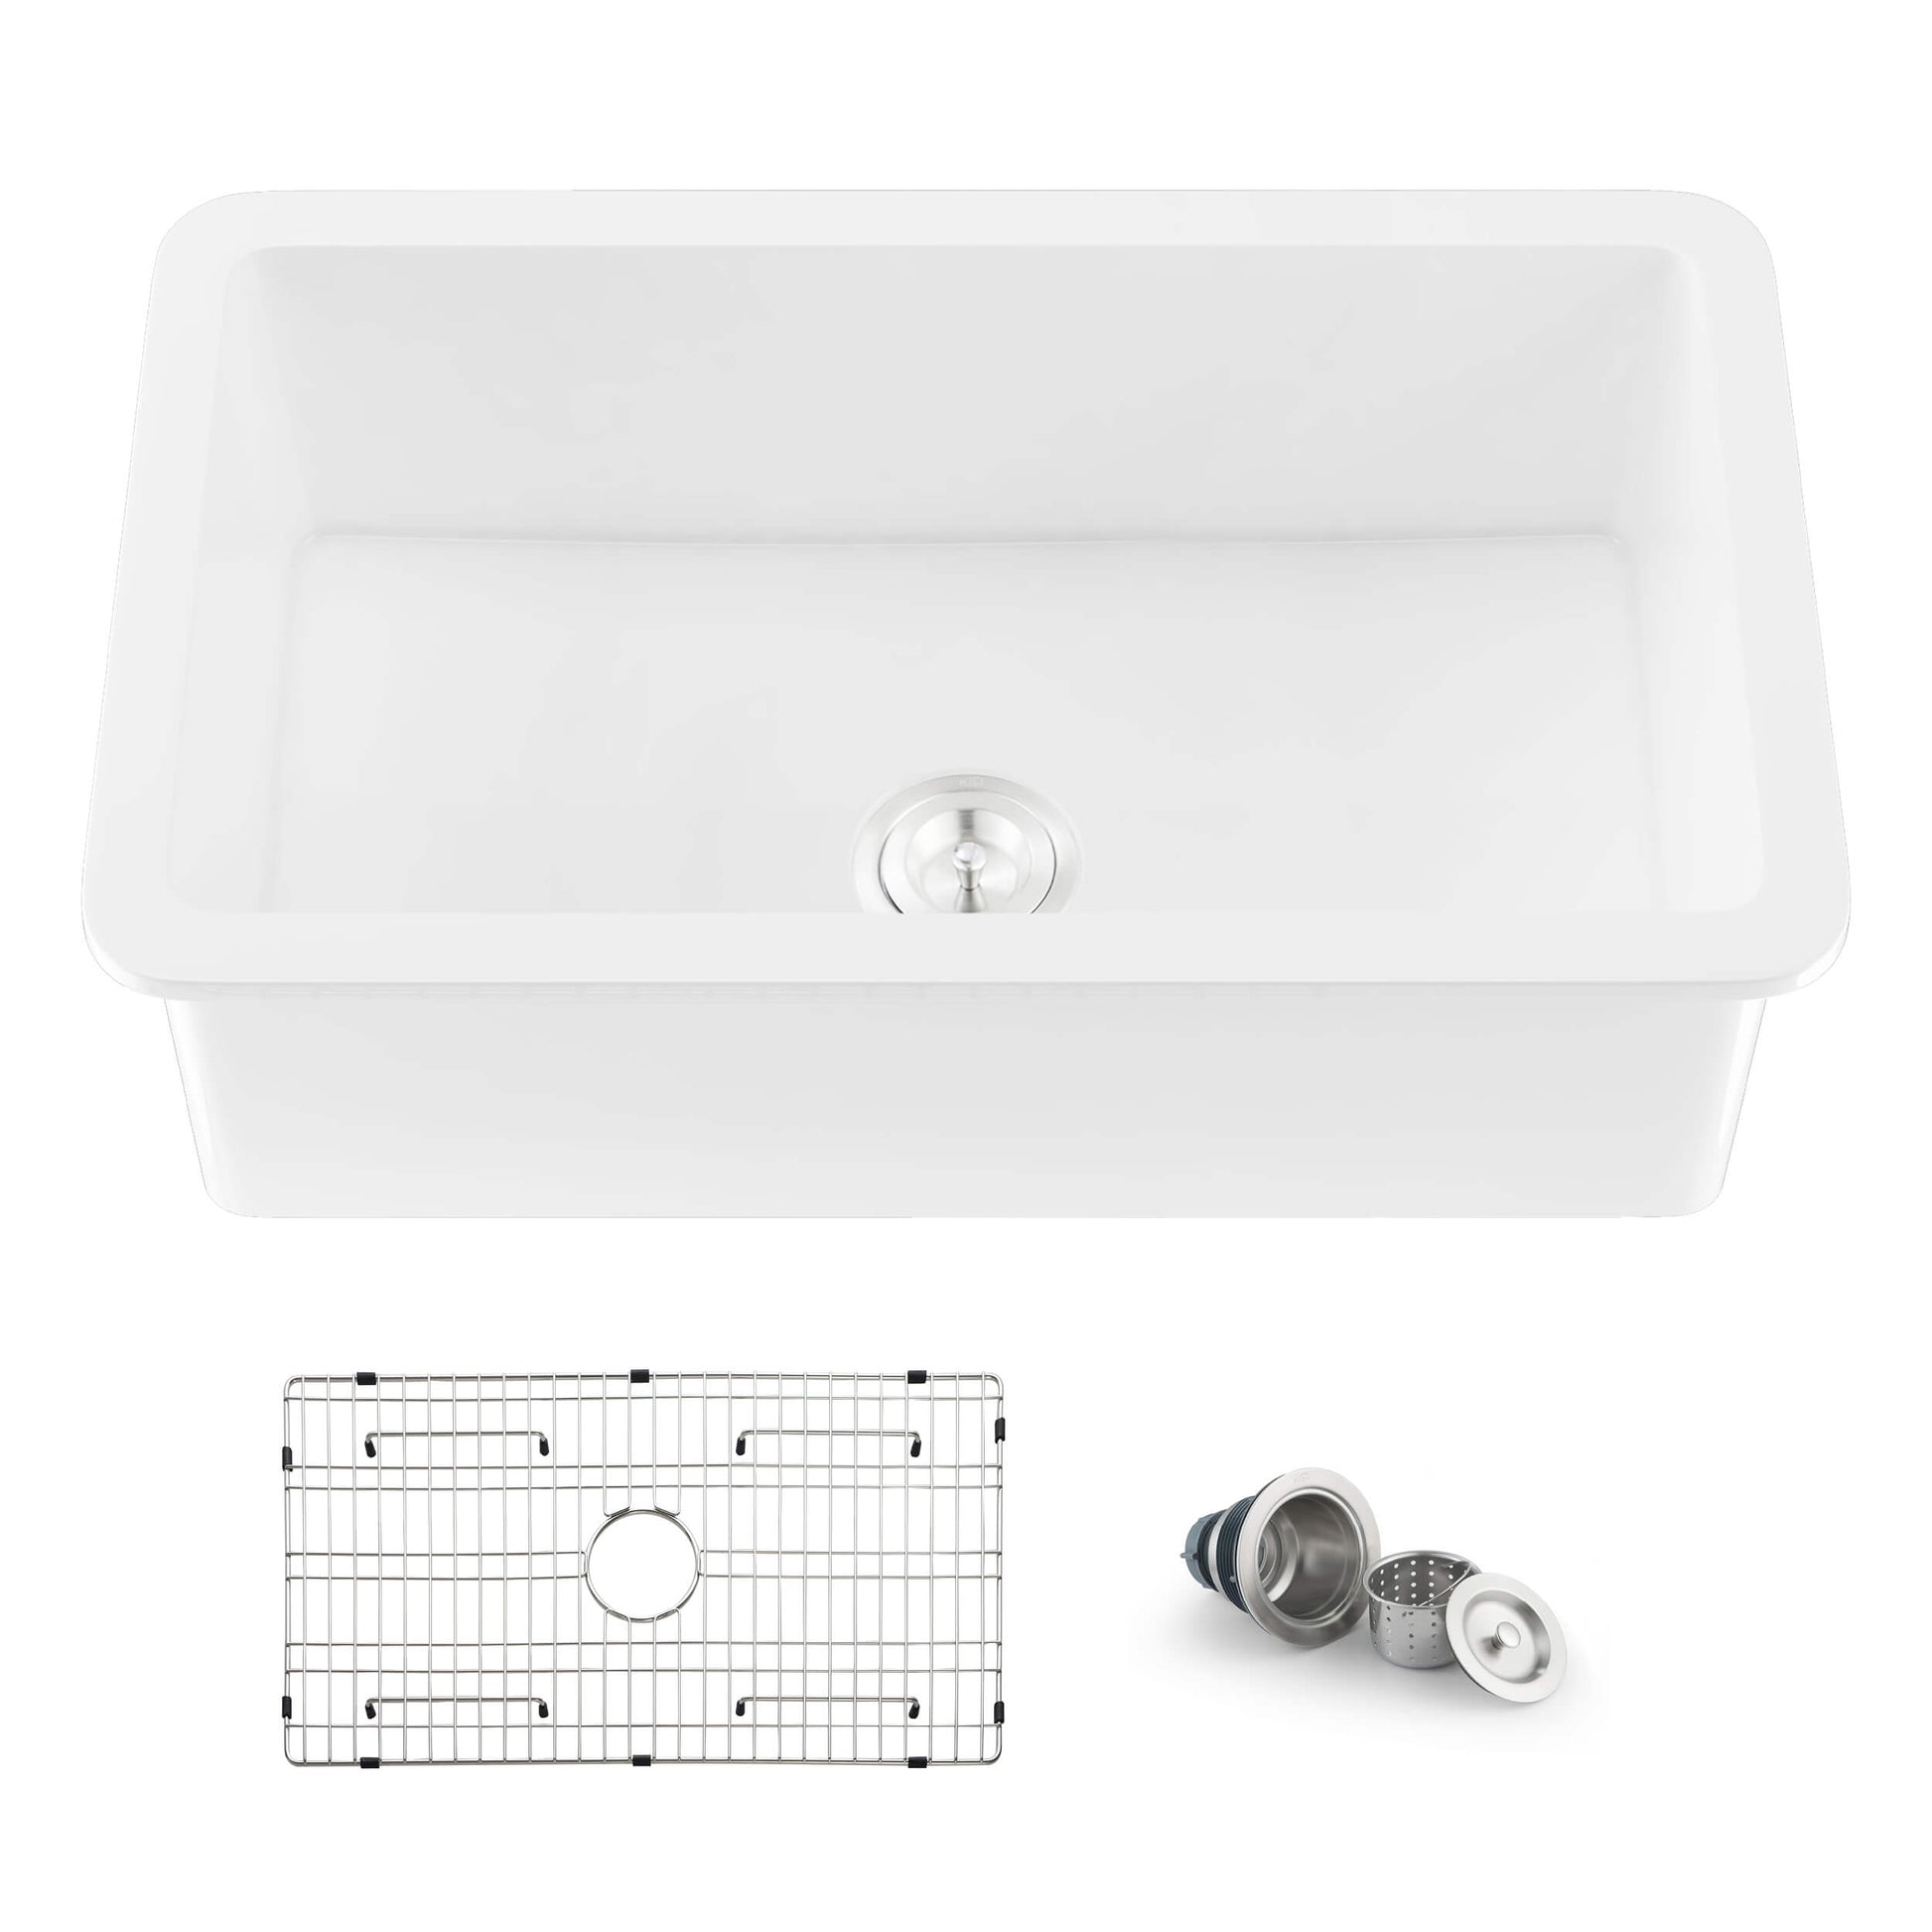 Kibi 32" x 19" x 10" Landis Series Undermounted Single Bowl Fireclay Kitchen Sink In Glossy White